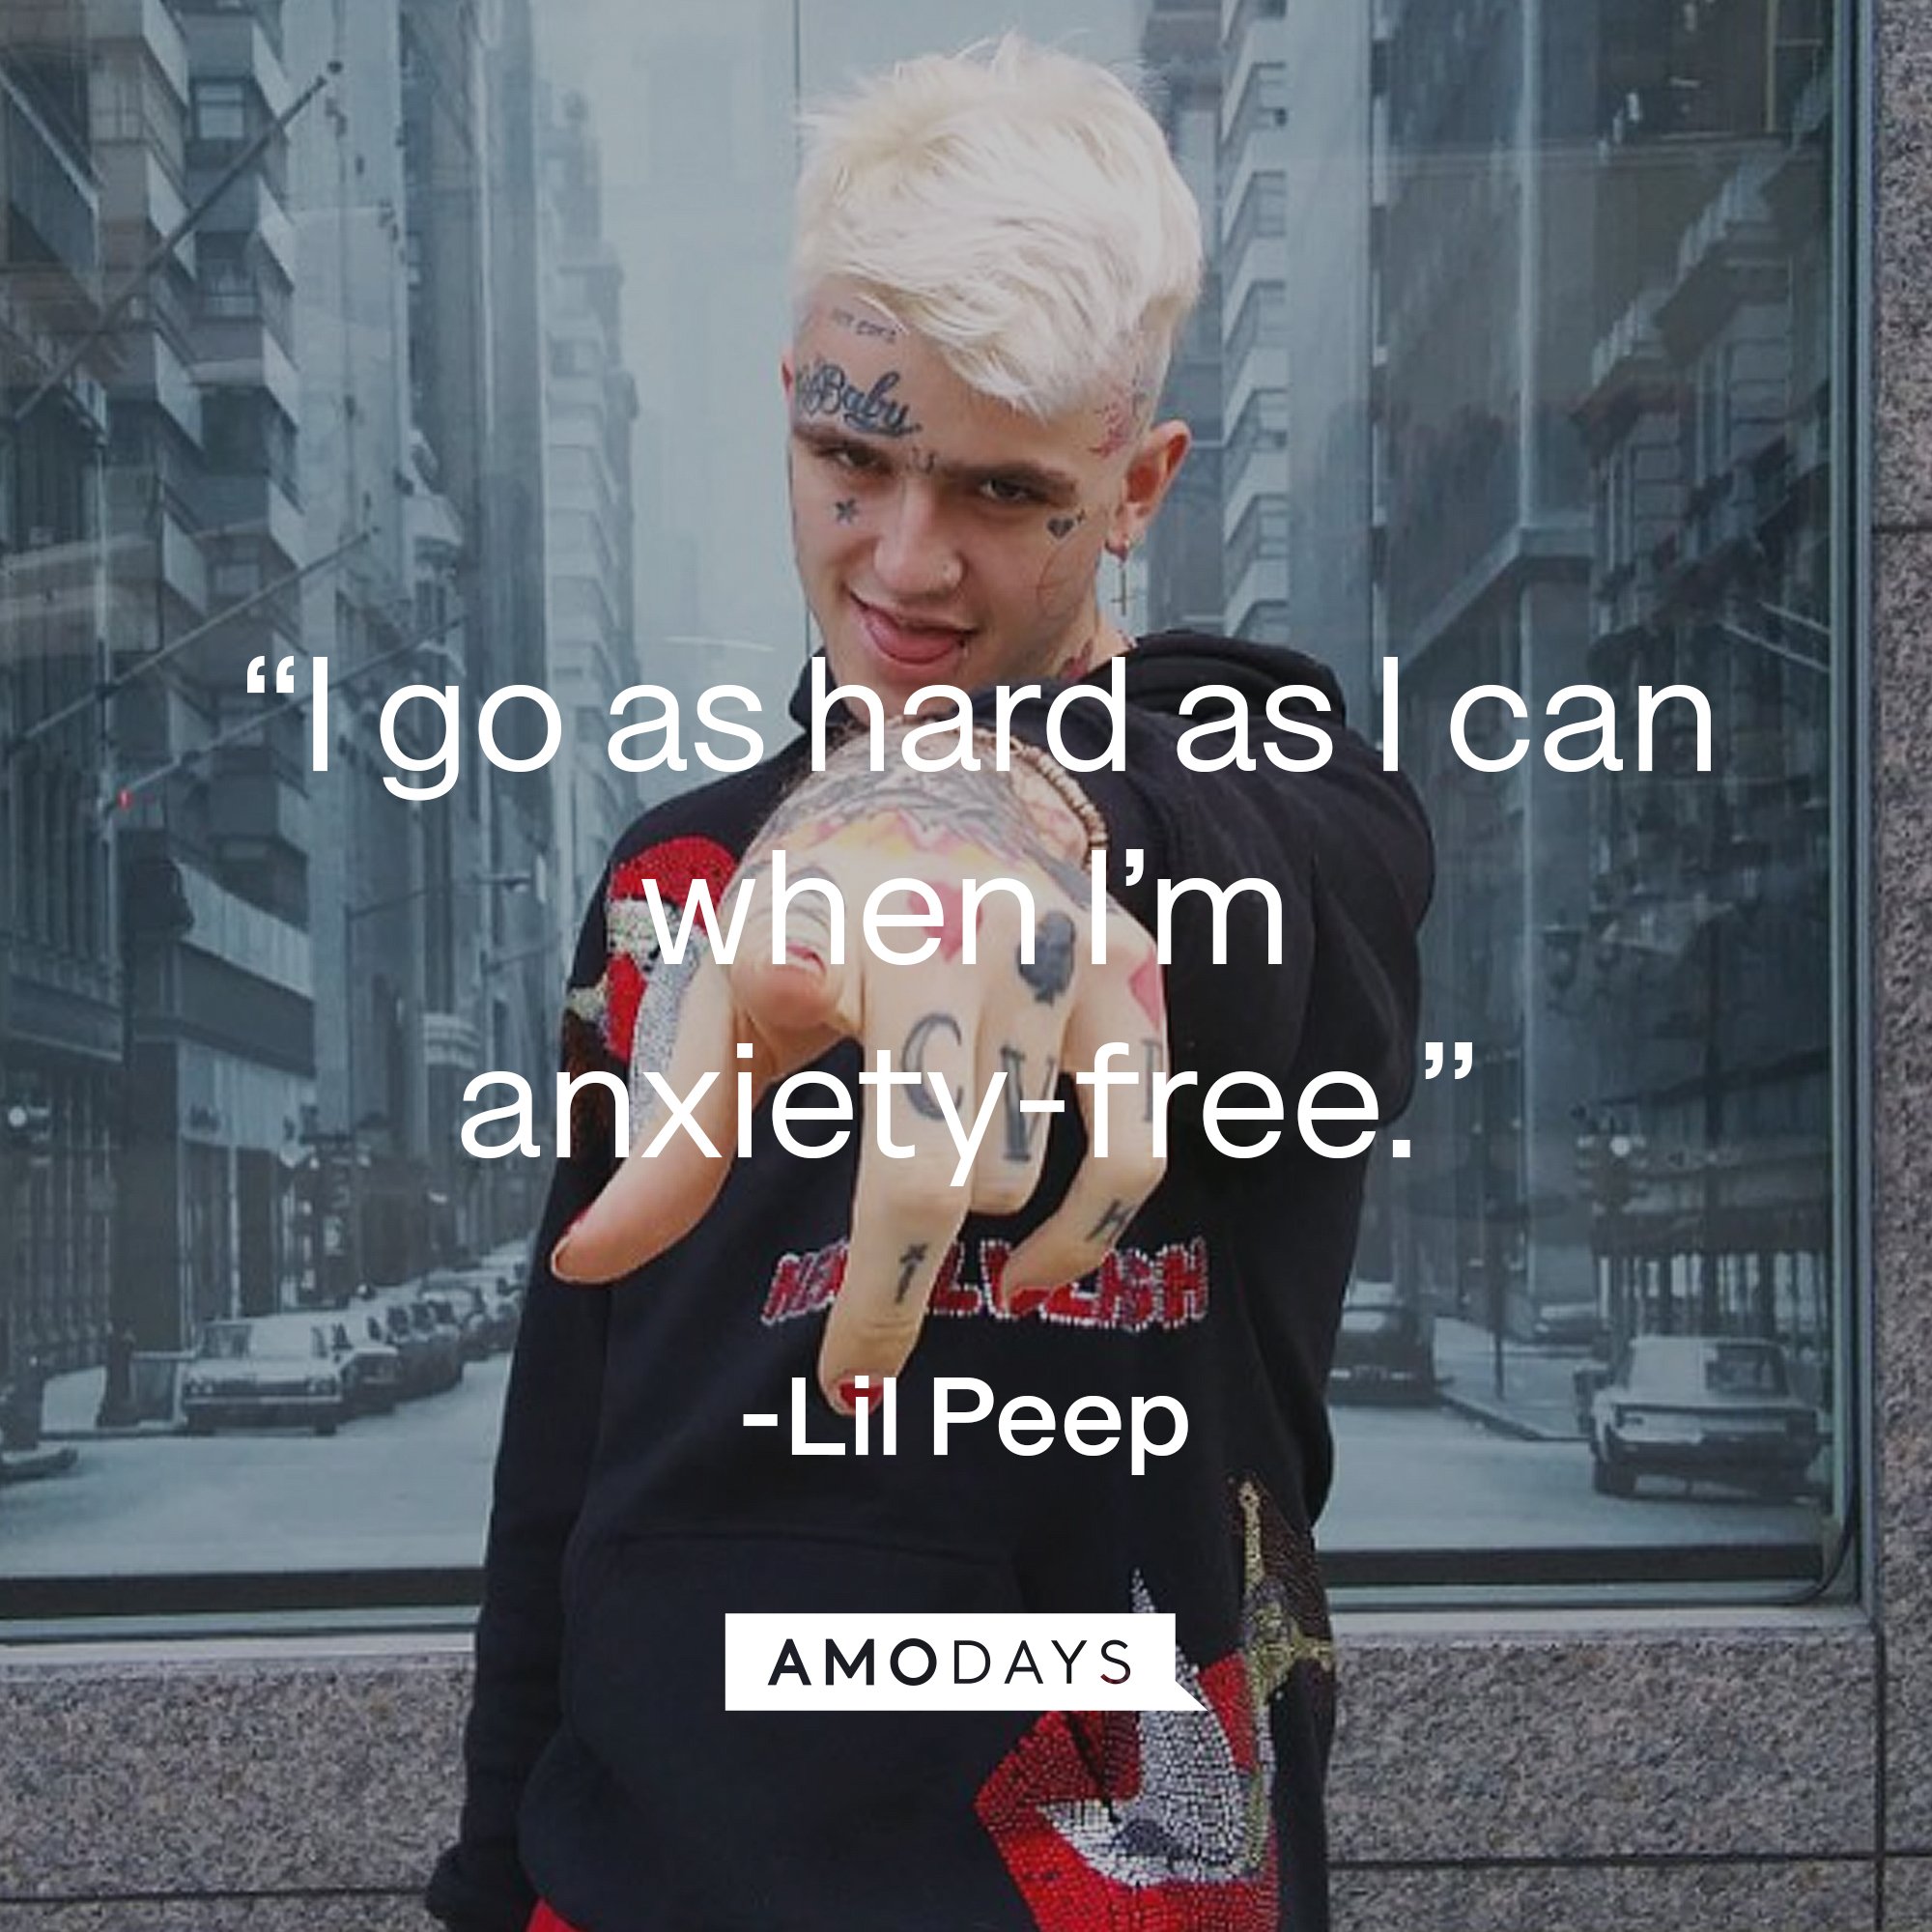 Lil Peep's quote: “I go as hard as I can when I’m anxiety-free.” | Image: AmoDays